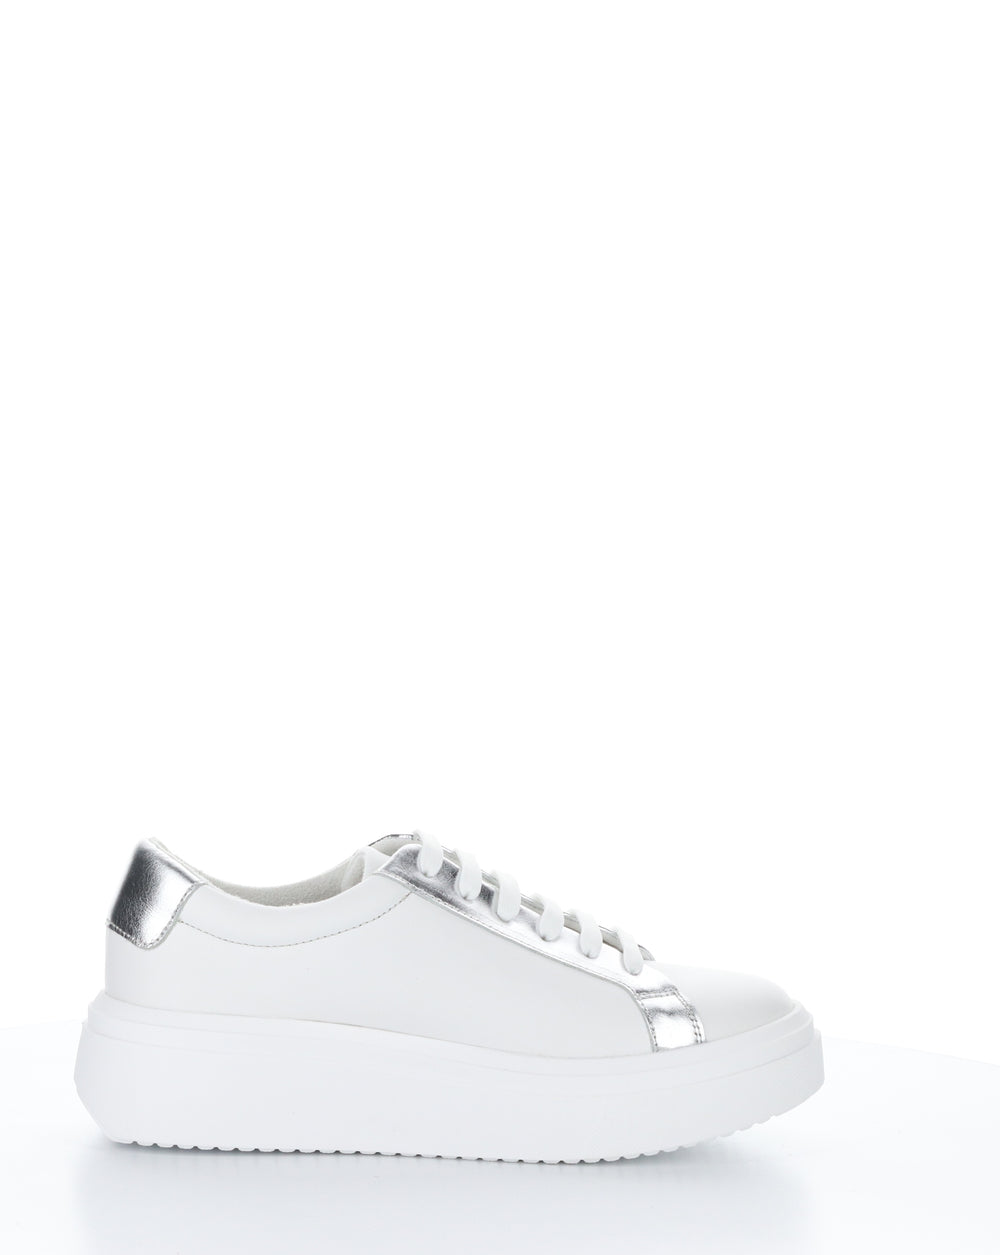 FUZI WHITE/SILVER Lace-up Shoes